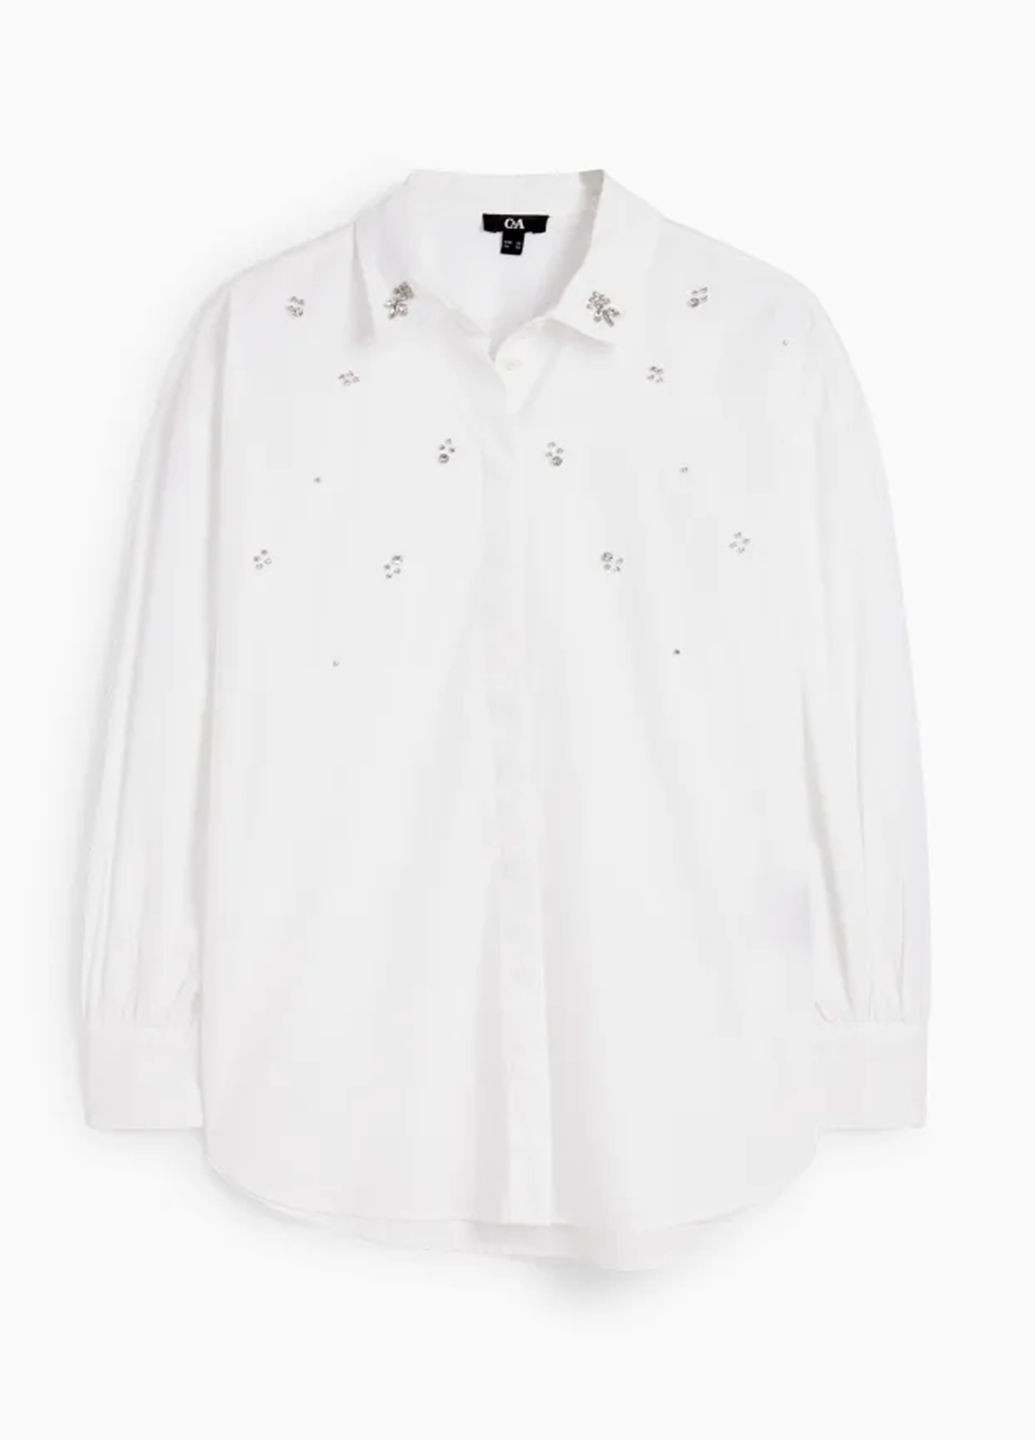 Белая блузка C&A